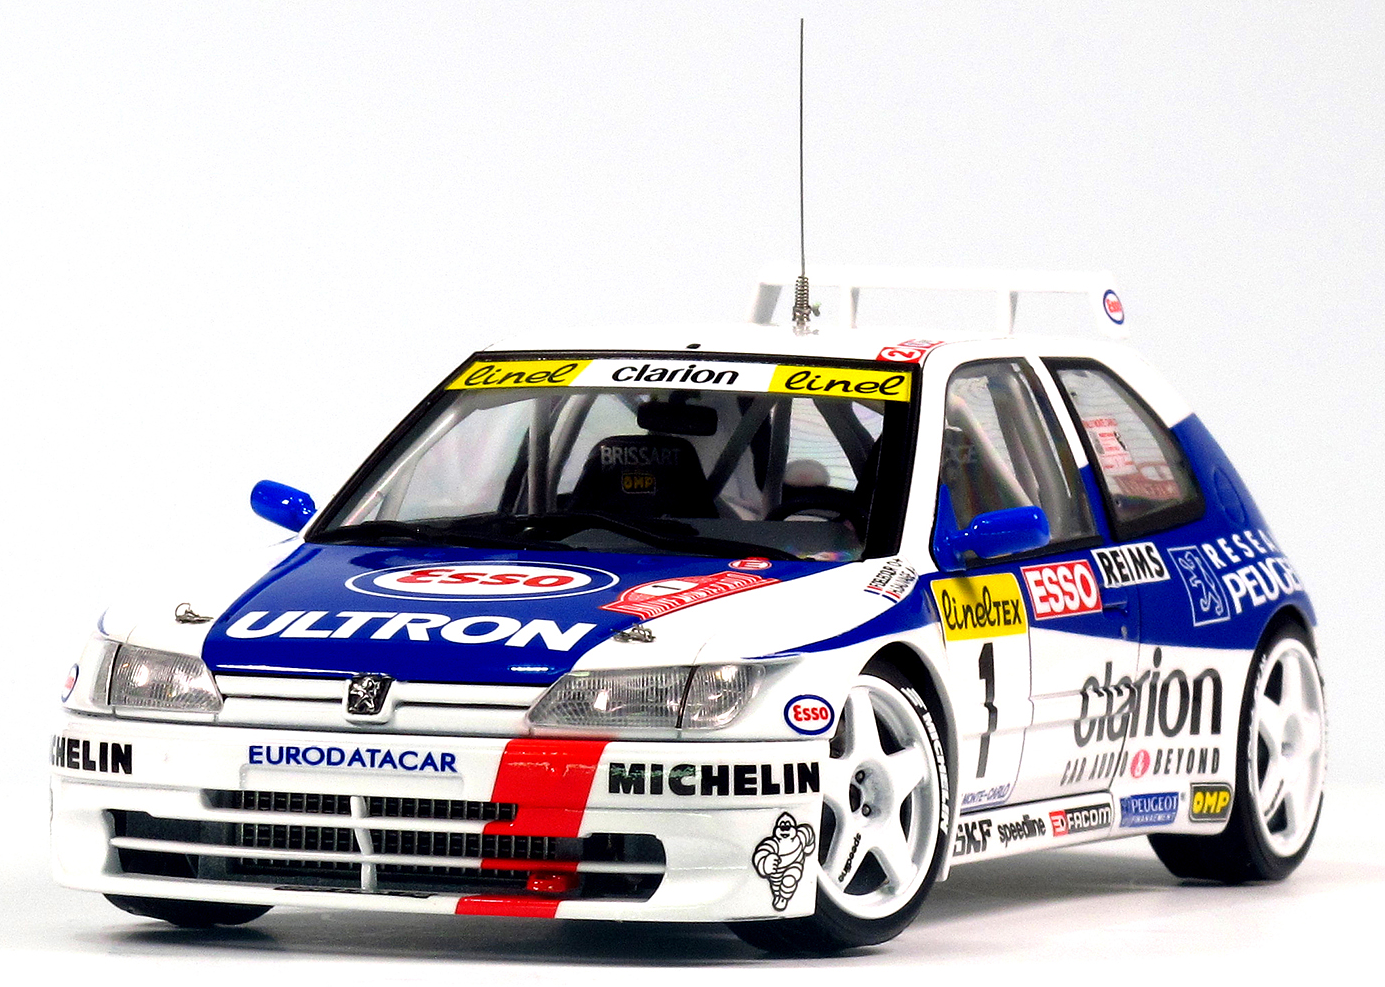 NuNu 1:24 Peugeot 306 Maxi 1996 Monte Carlo Rally